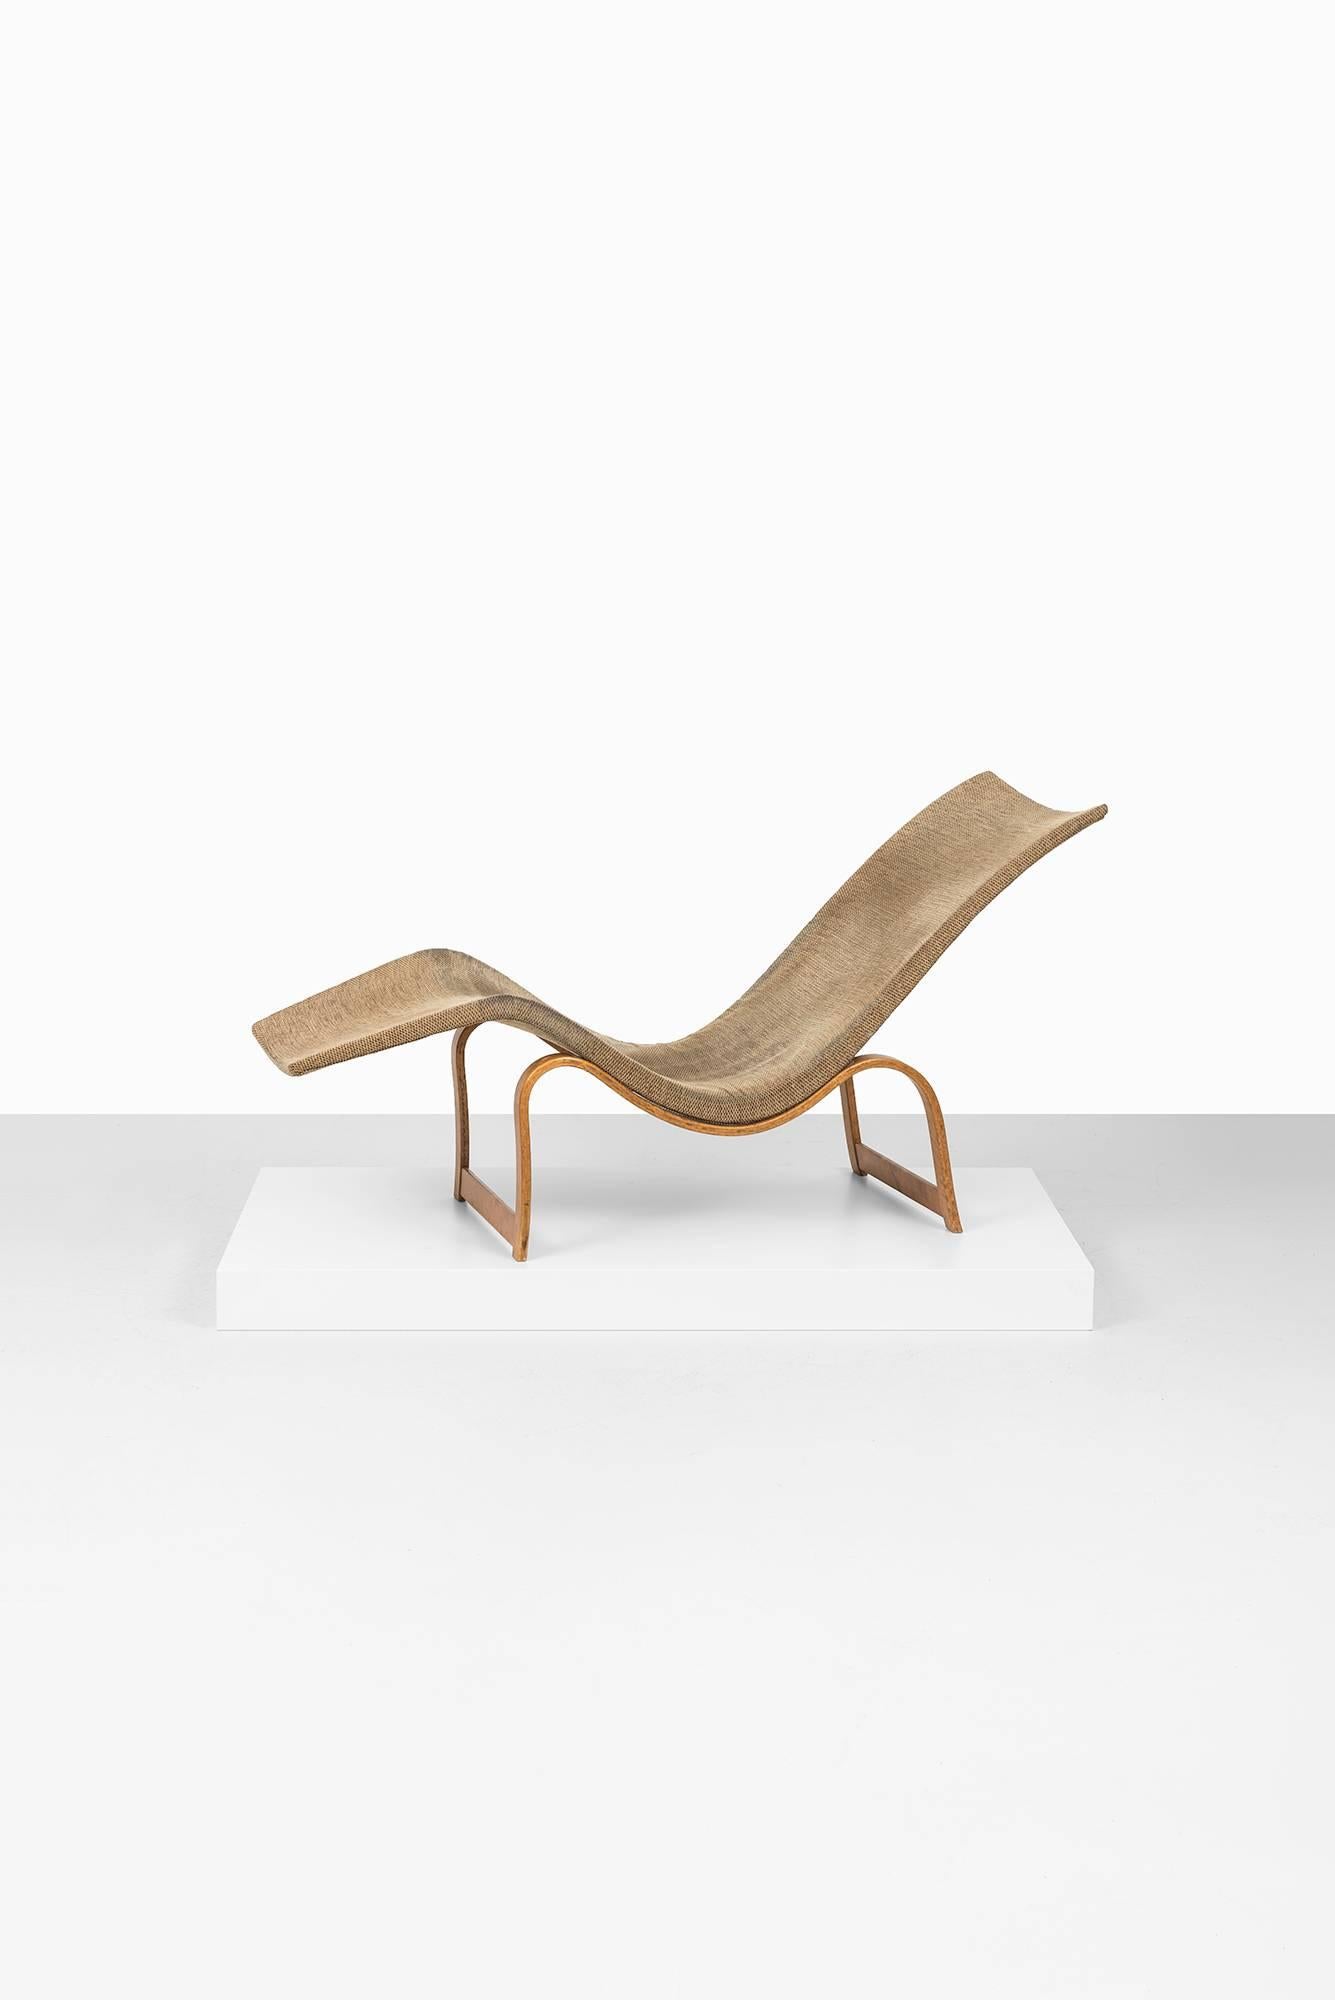 Mid-20th Century Bruno Mathsson Lounge Chair Model 36 by Karl Mathsson in Sweden